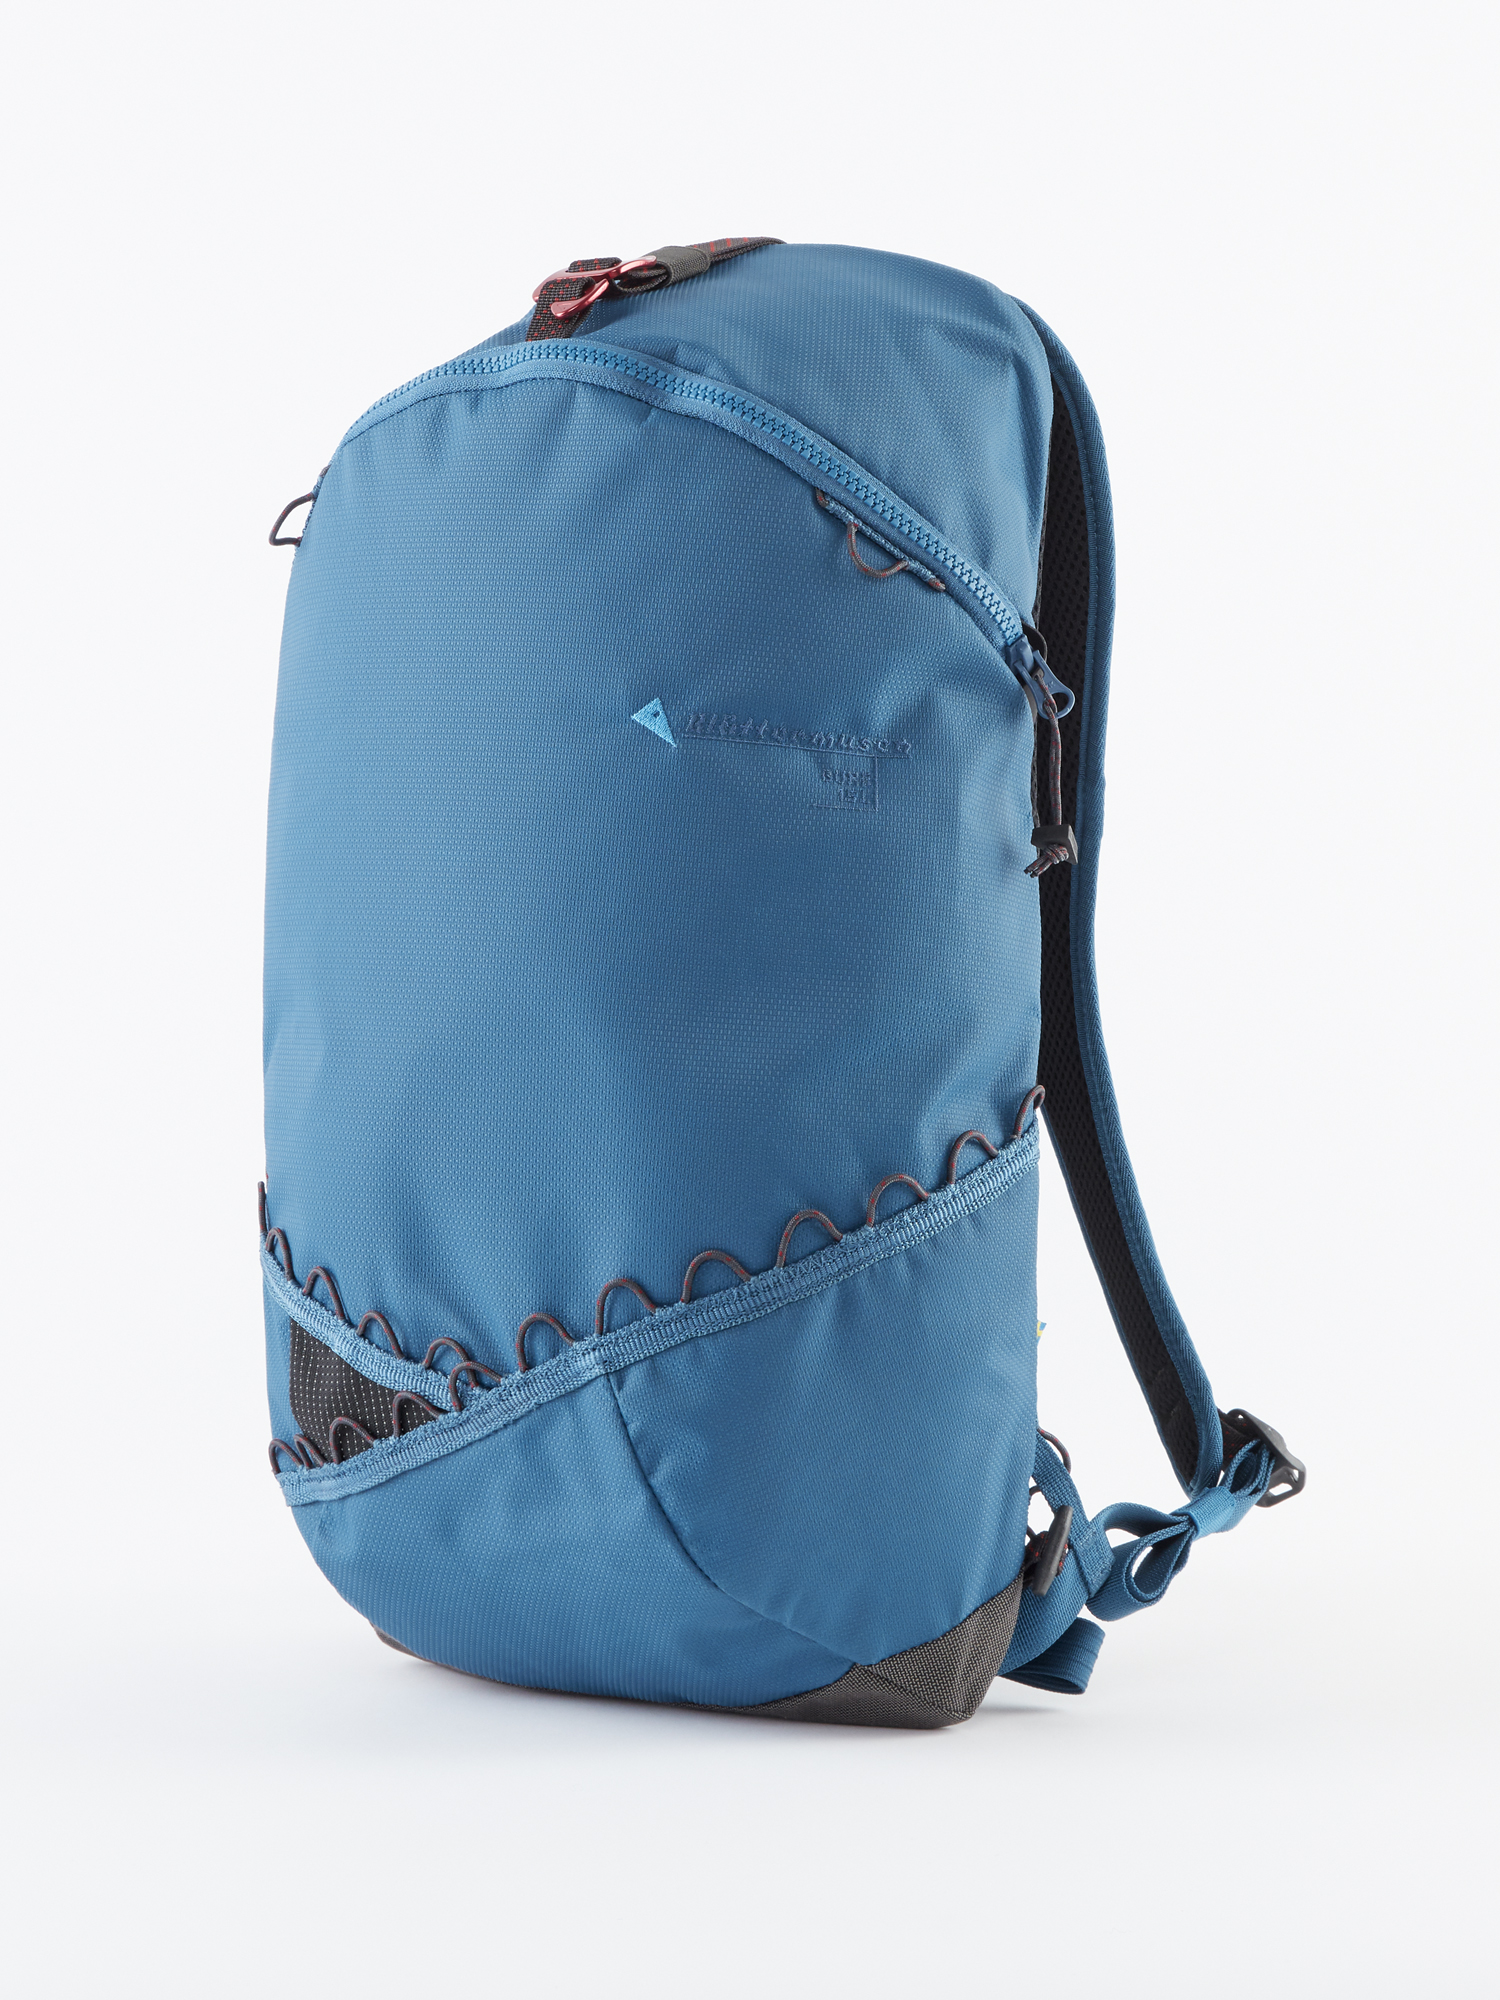 40384U91 - Bure Backpack 15L - Blue Sapphire